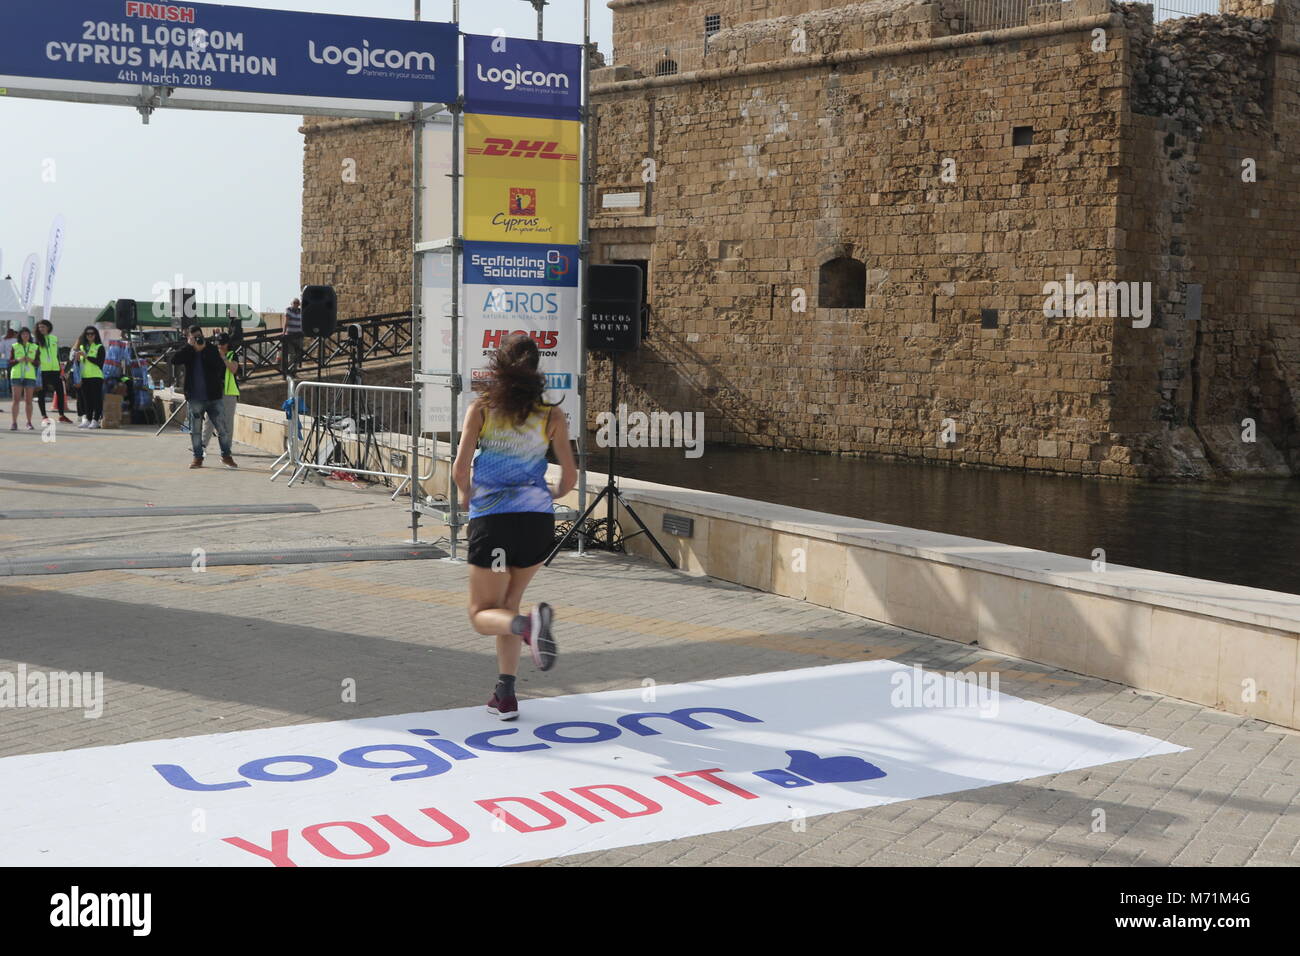 Competitors completing the 20th Logicom Cyprus marathon, half marathon, 10KM, 5KM fun run for international competitors in kato Paphos, Cyprus, Europe Stock Photo